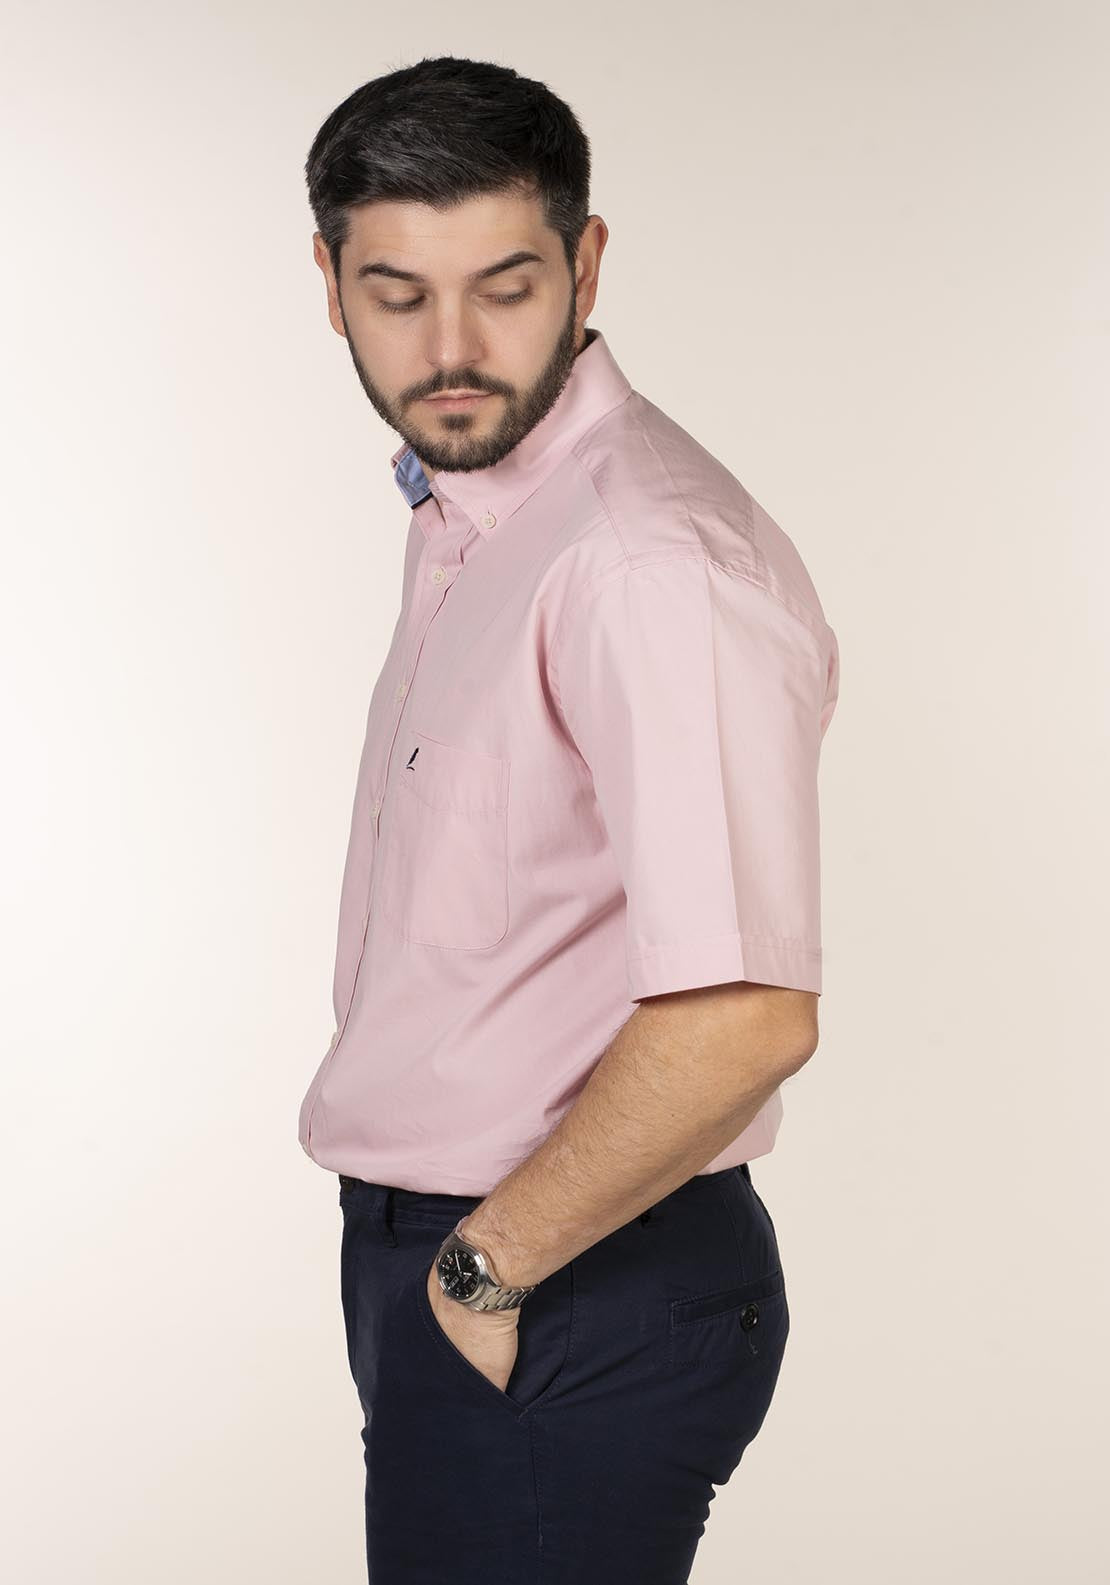 Yeats Casual Plain Short Sleeve Shirt - Pink 5 Shaws Department Stores